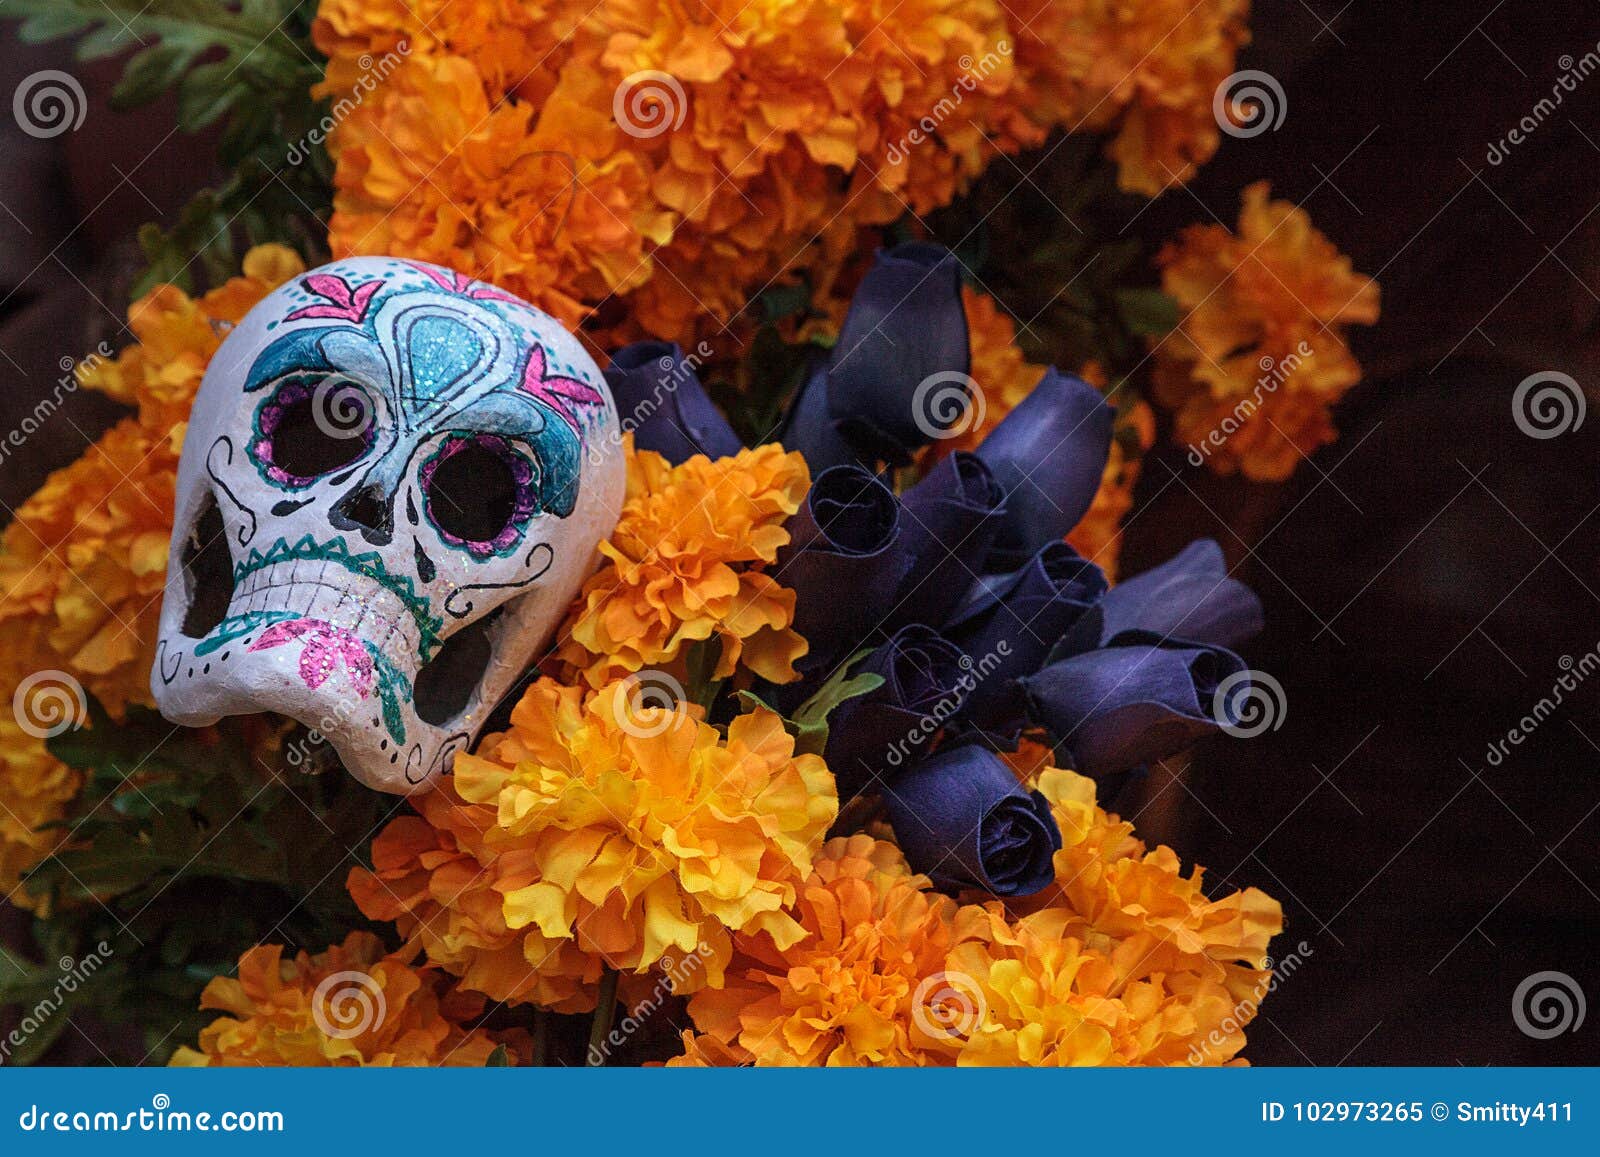 flower and skeleton alter at dia de los muertos